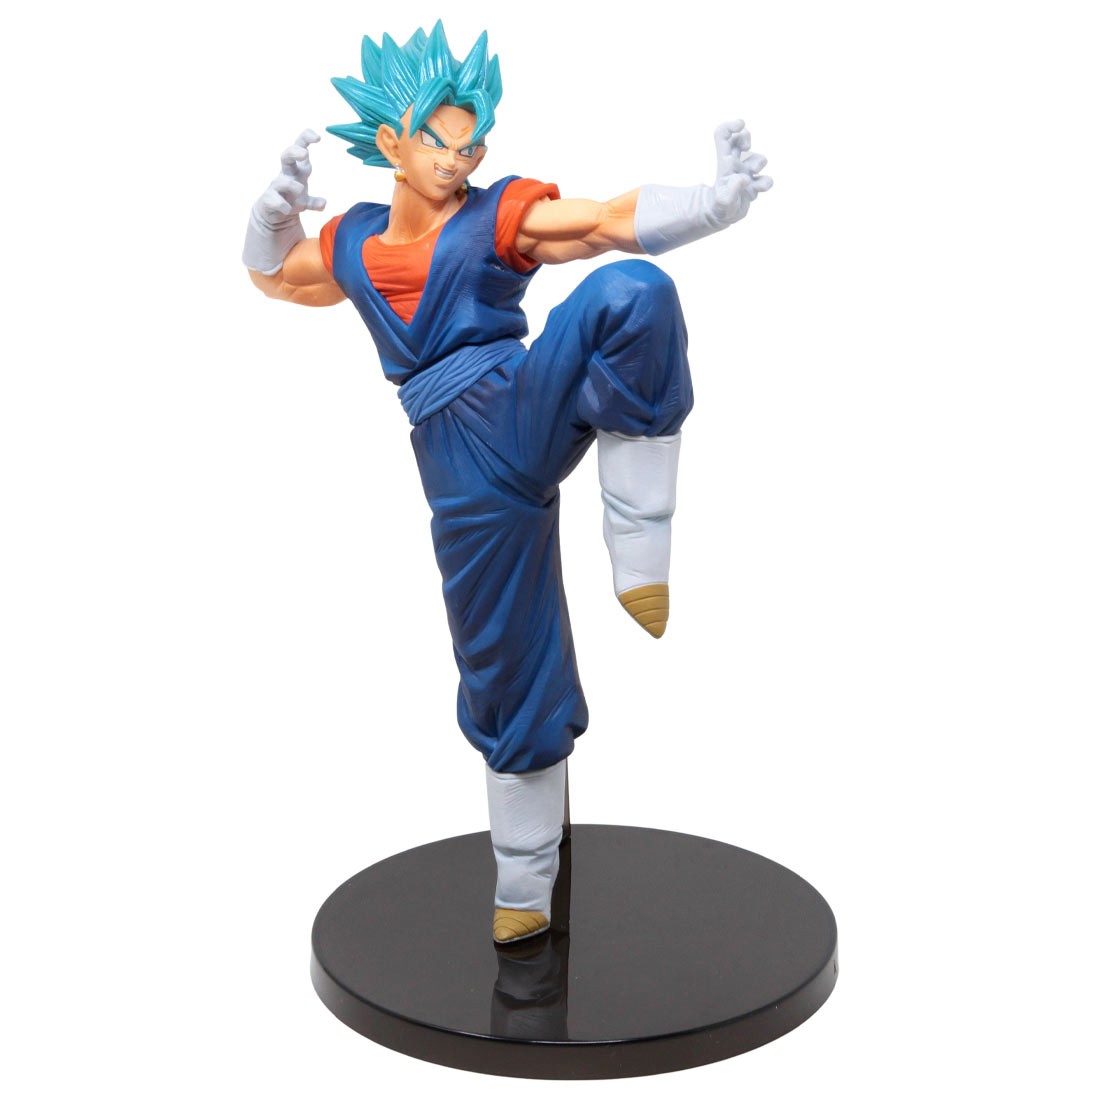 Banpresto Dragon Ball Super Son Goku Fes!! Vol 14 Super Saiyan God Super Saiyan Vegito Figure (blue)